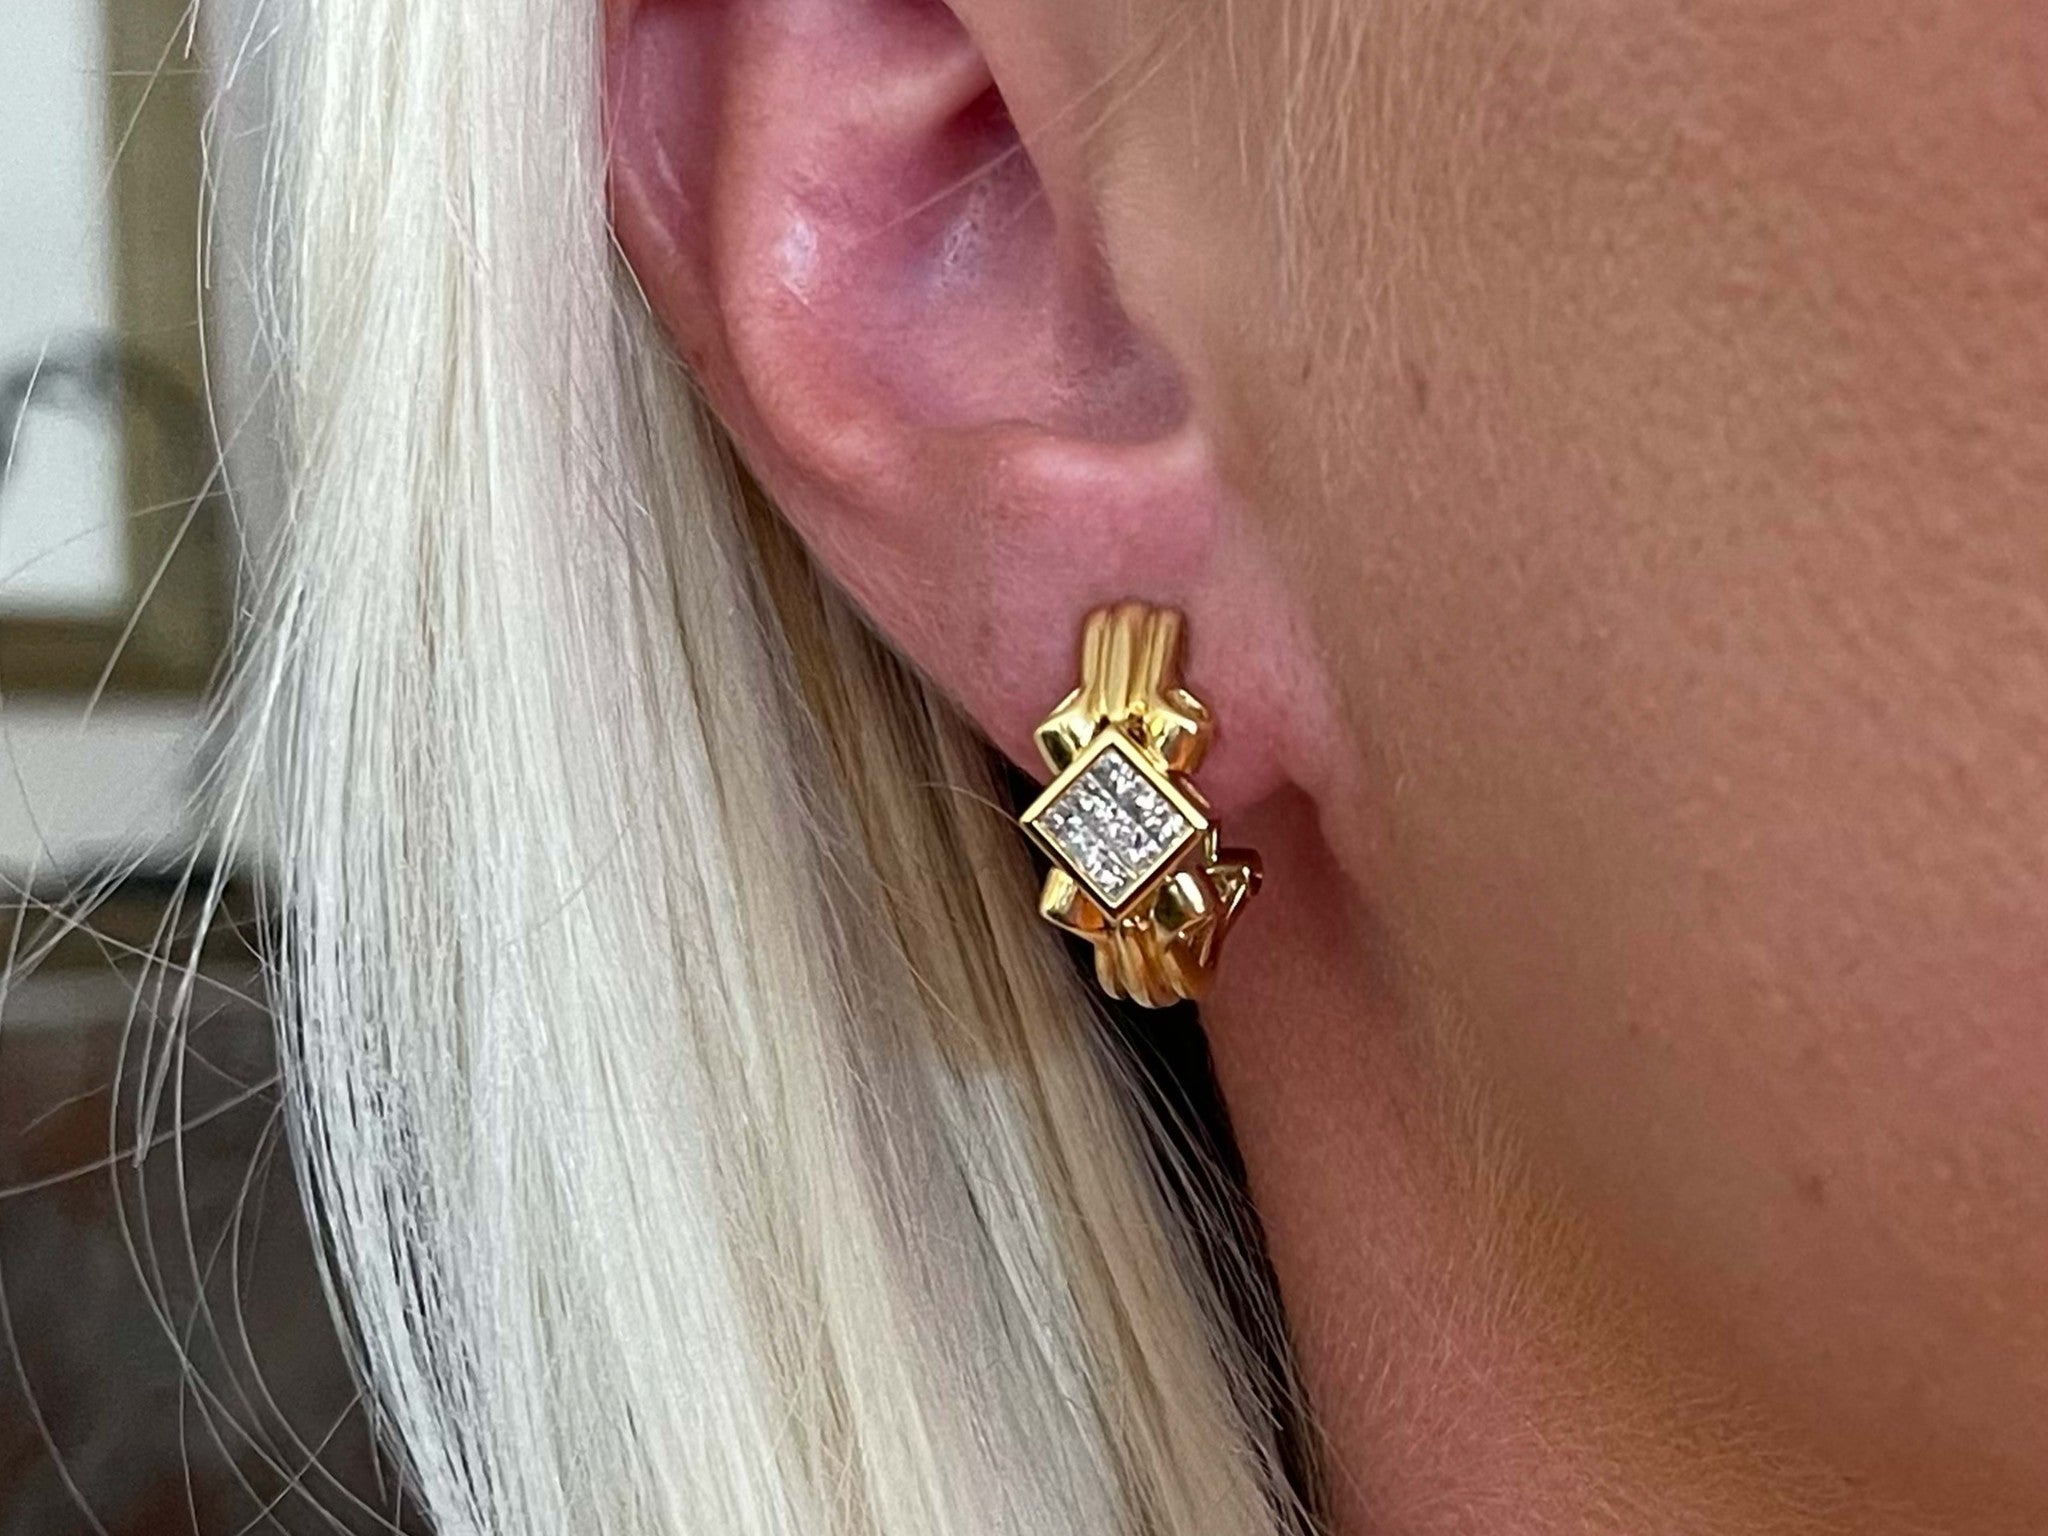 Princess Cut Diamond Huggie Earrings in 18k Yellow Gold